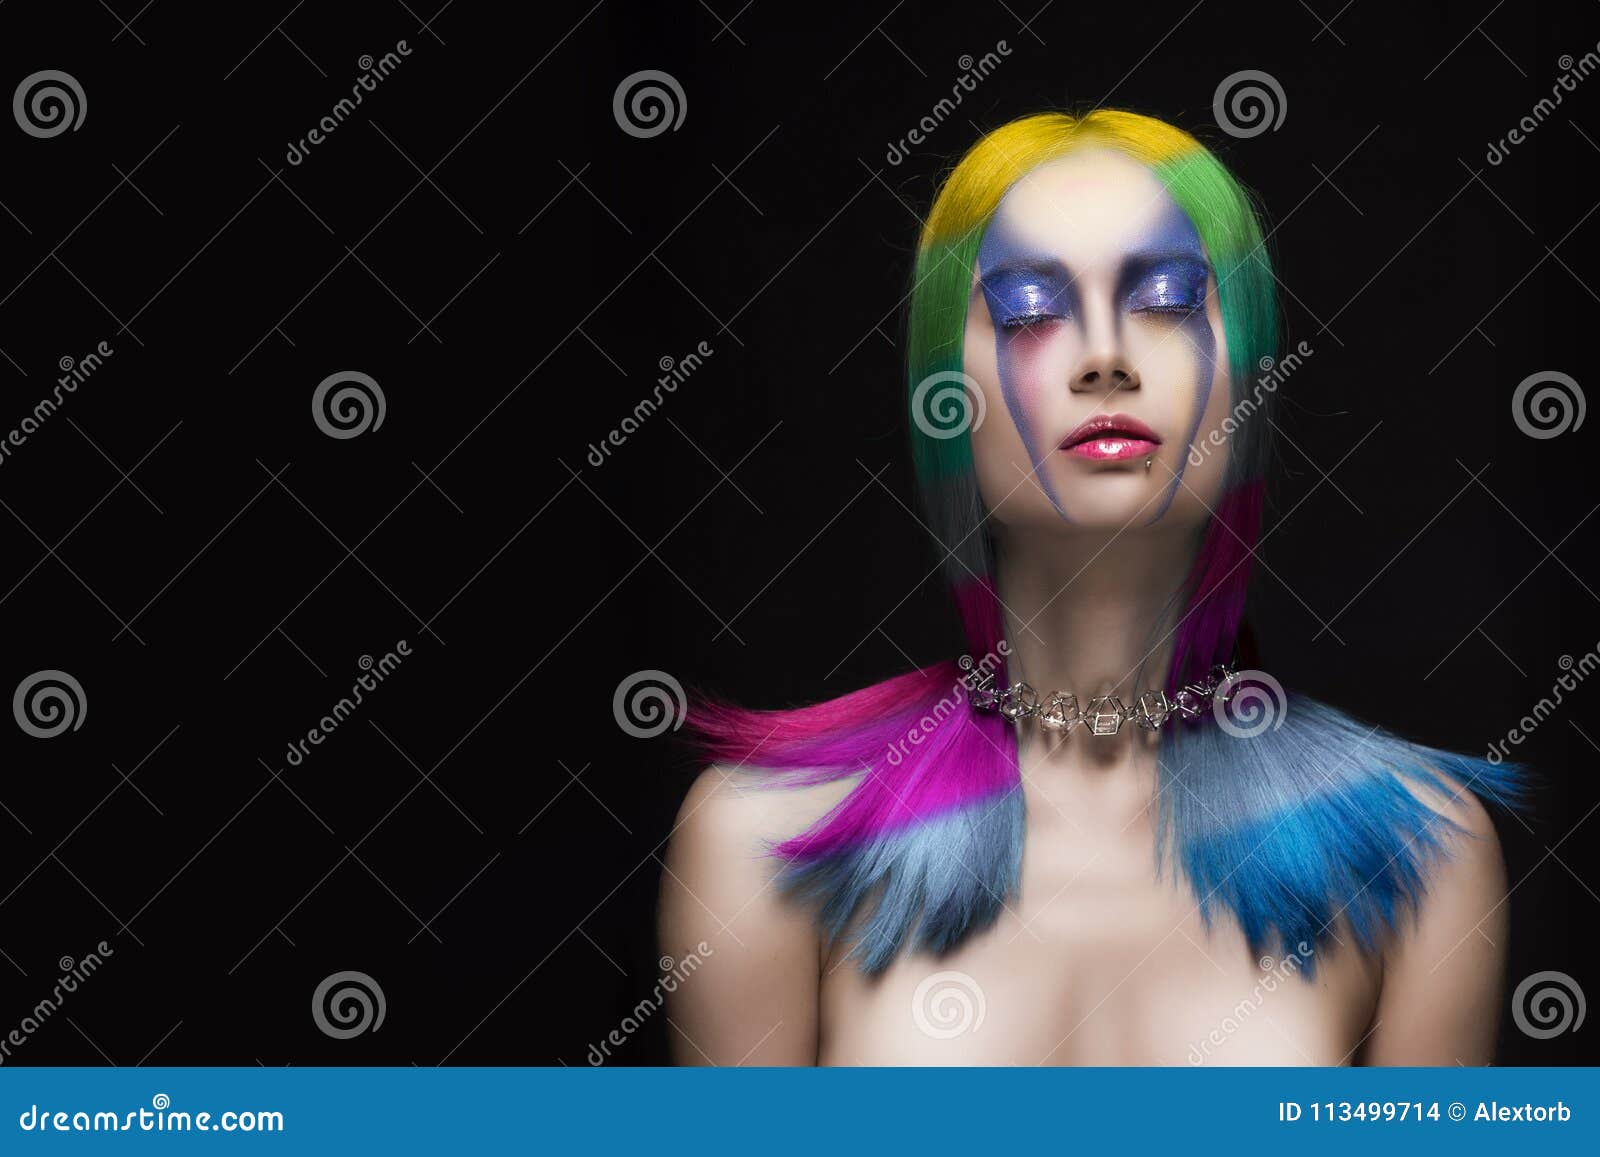 Dyed Hair Chicks Naked Sheree Norden Desnudo